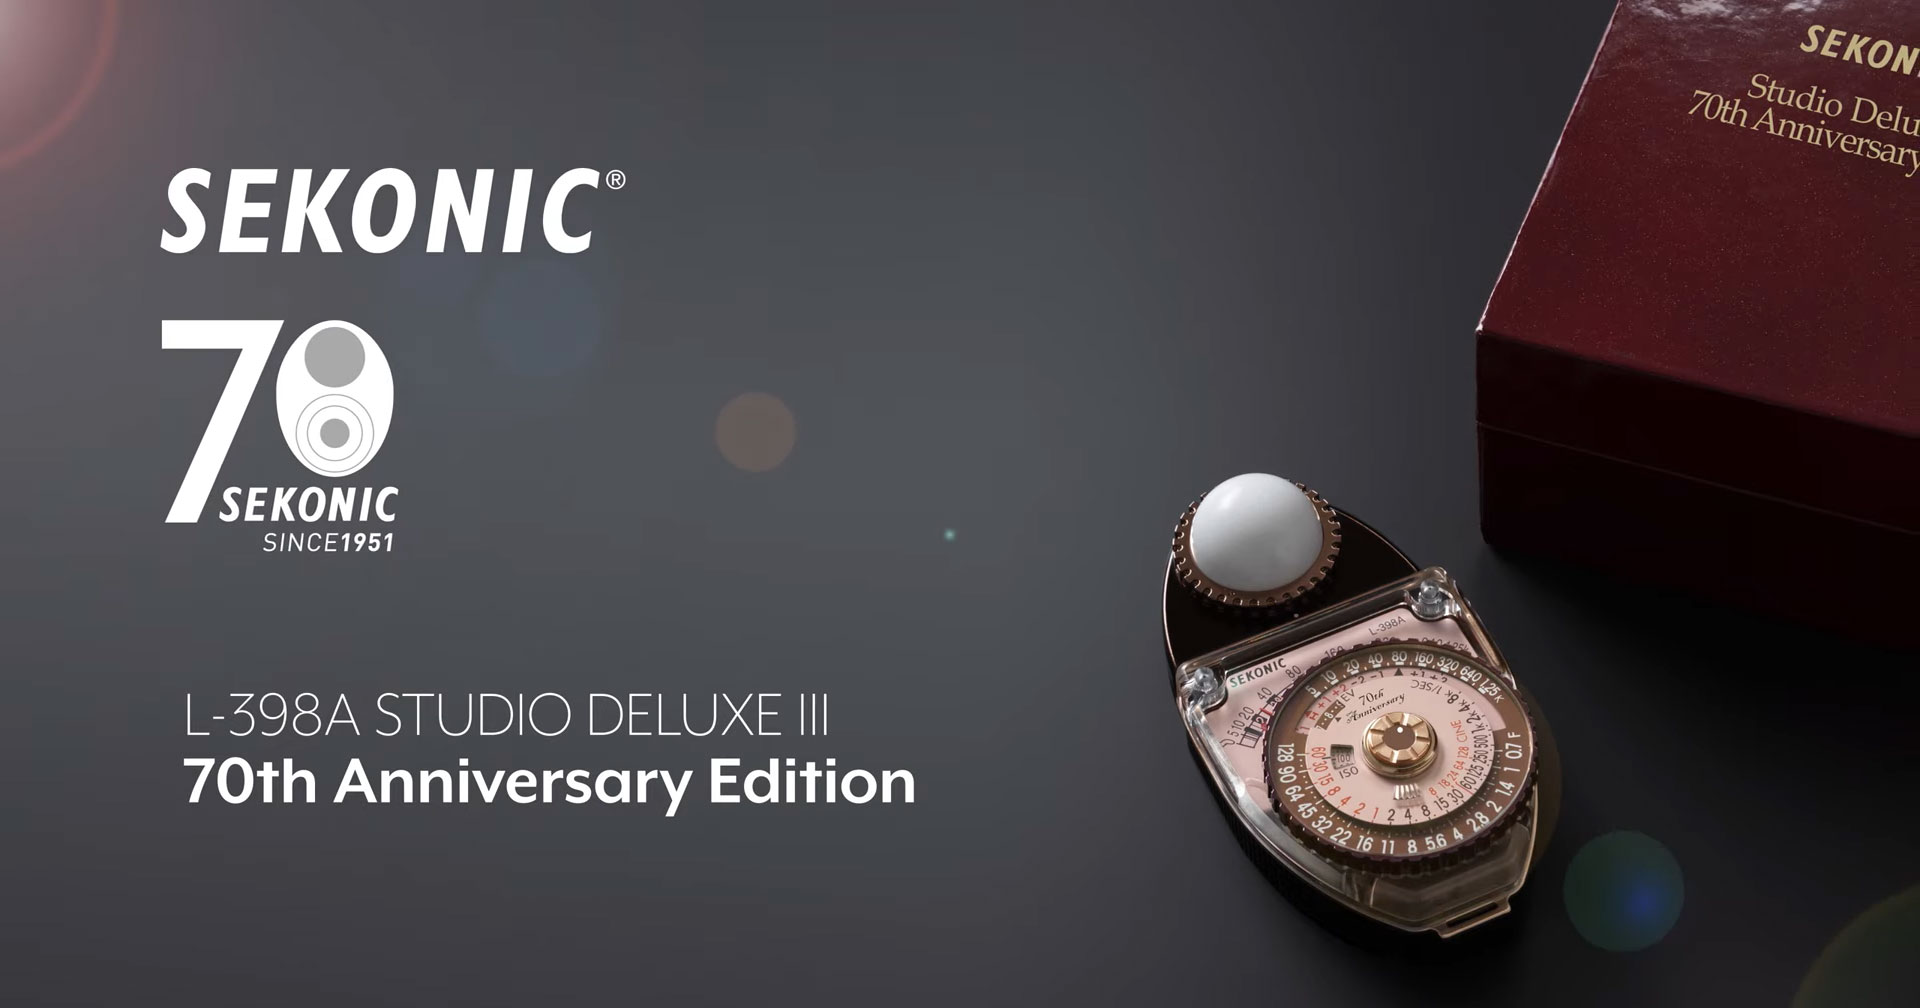 Sekonic ฉลองครบรอบ 70 ปี เปิดตัวเครื่องวัดแสงสุดคลาสสิก Limited Edition